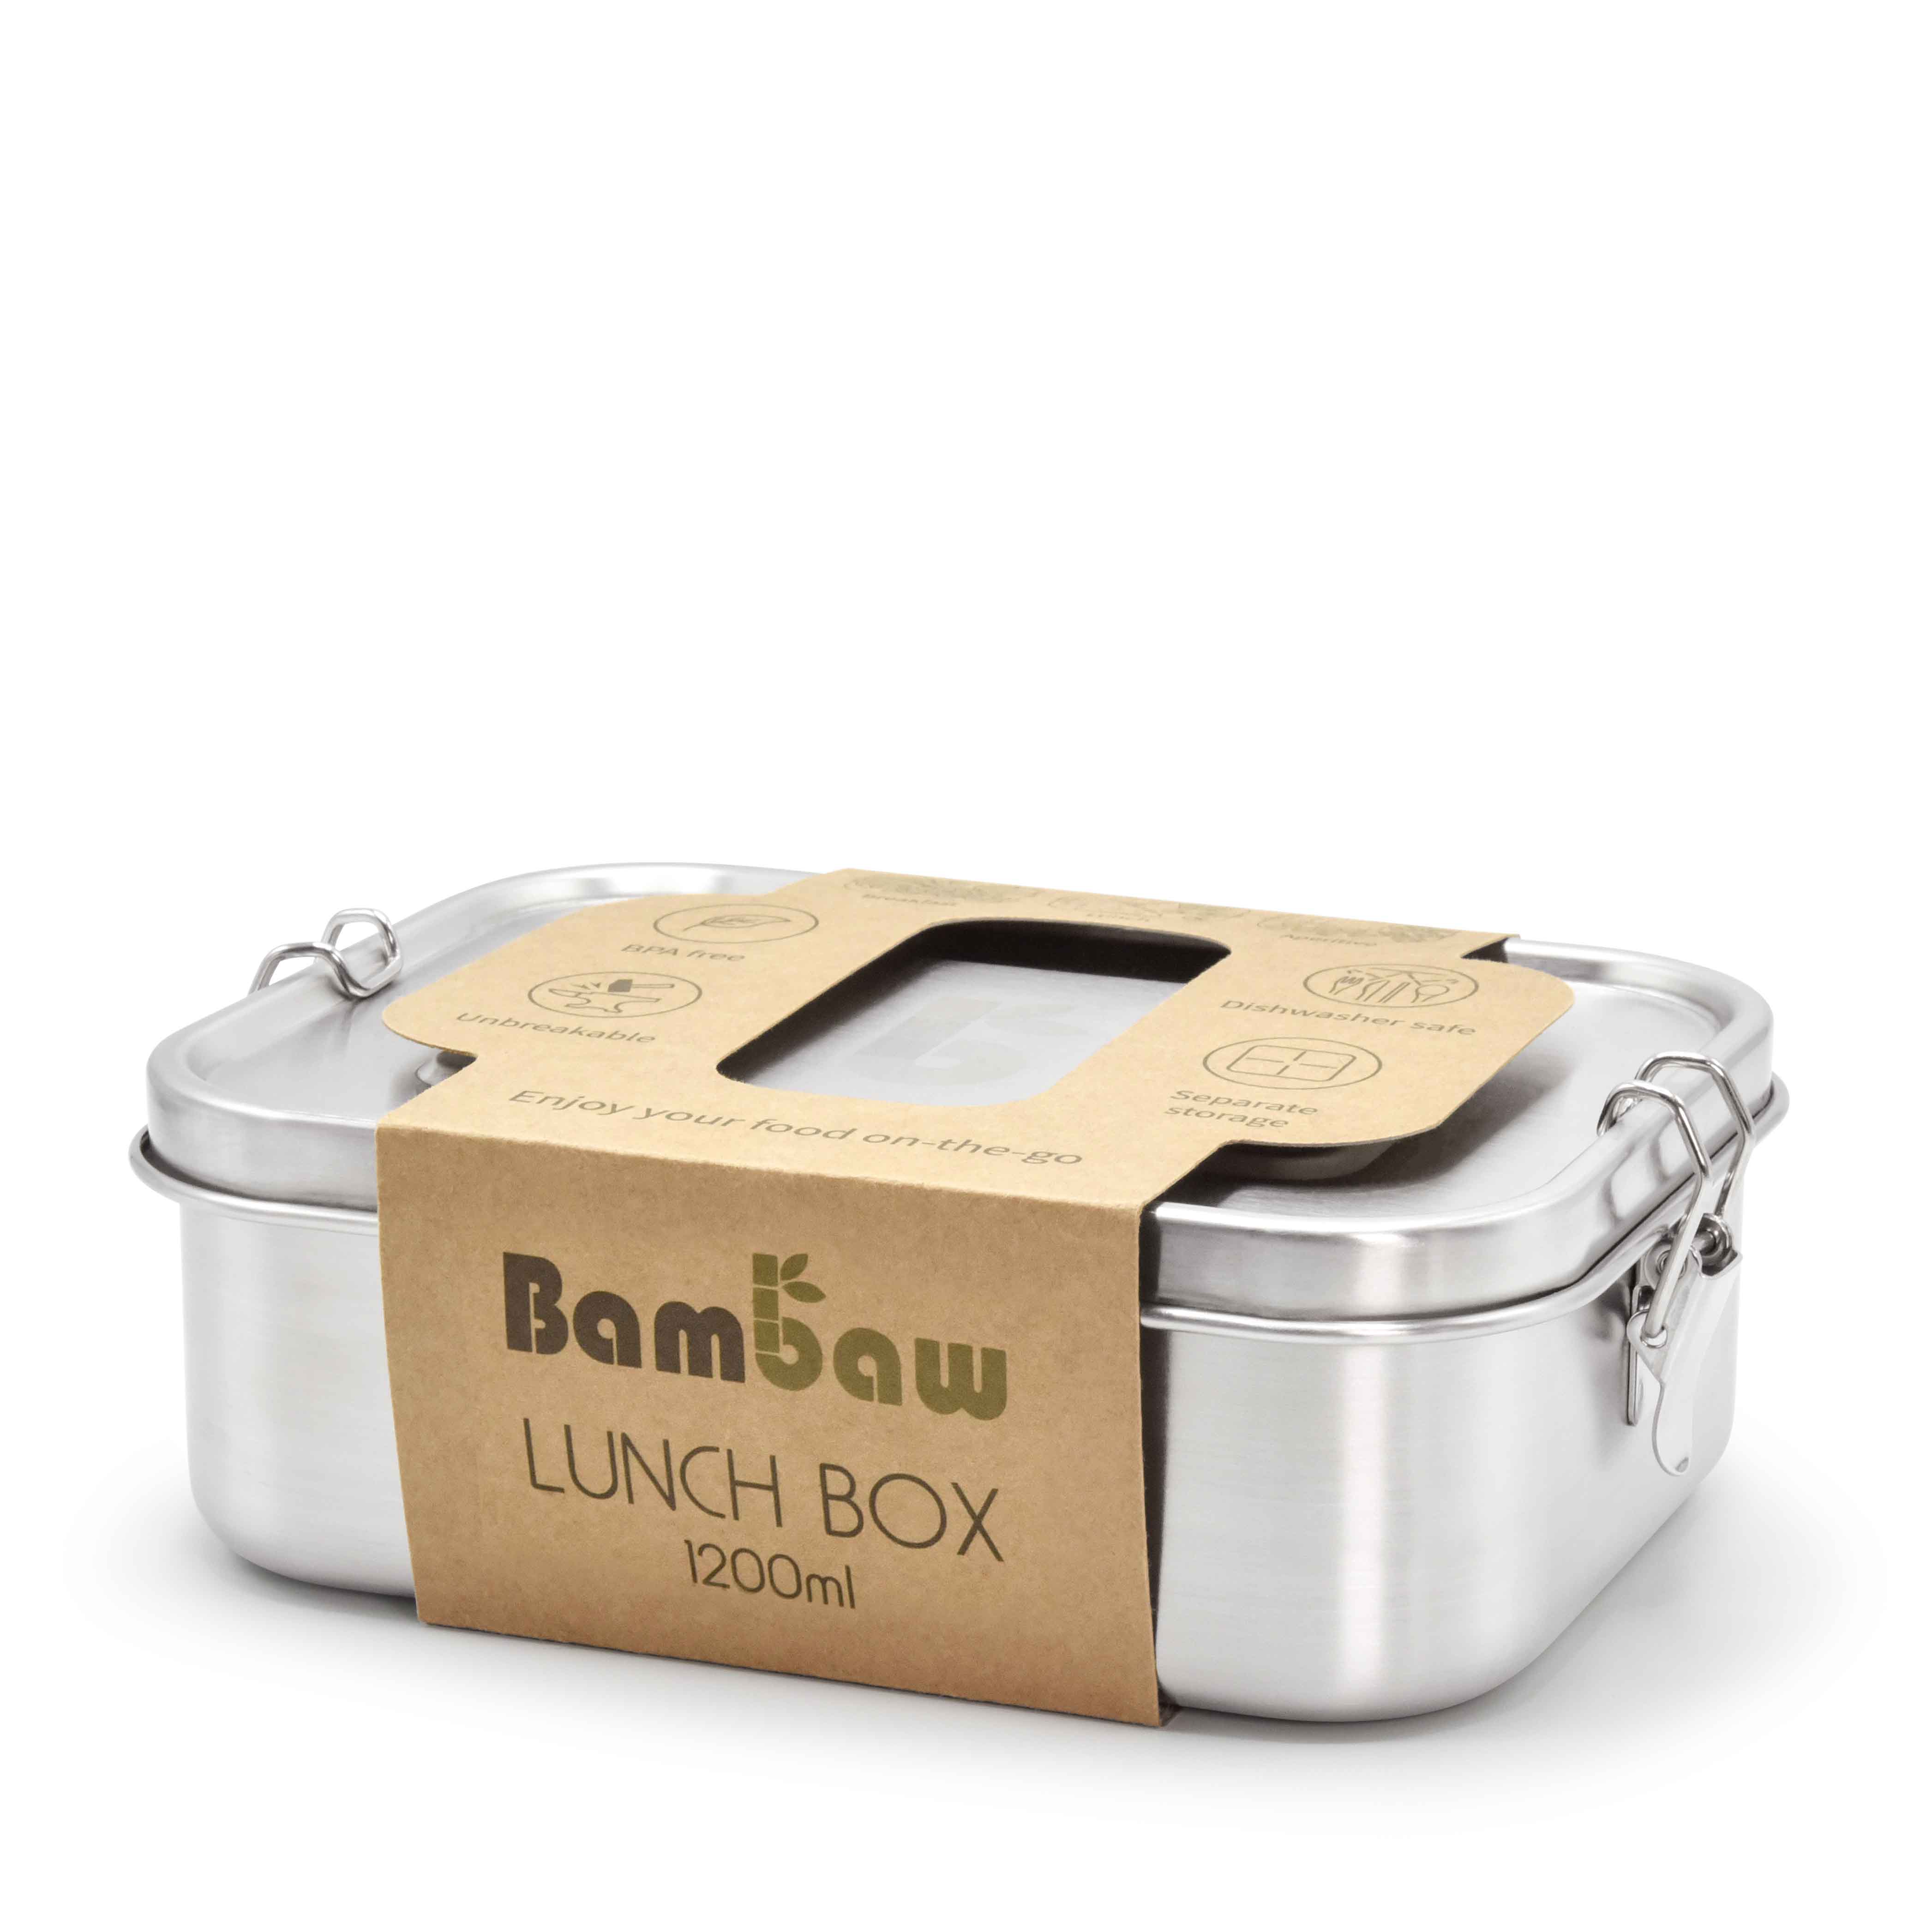 Bambaw-Lunchbox-LM-1200-1